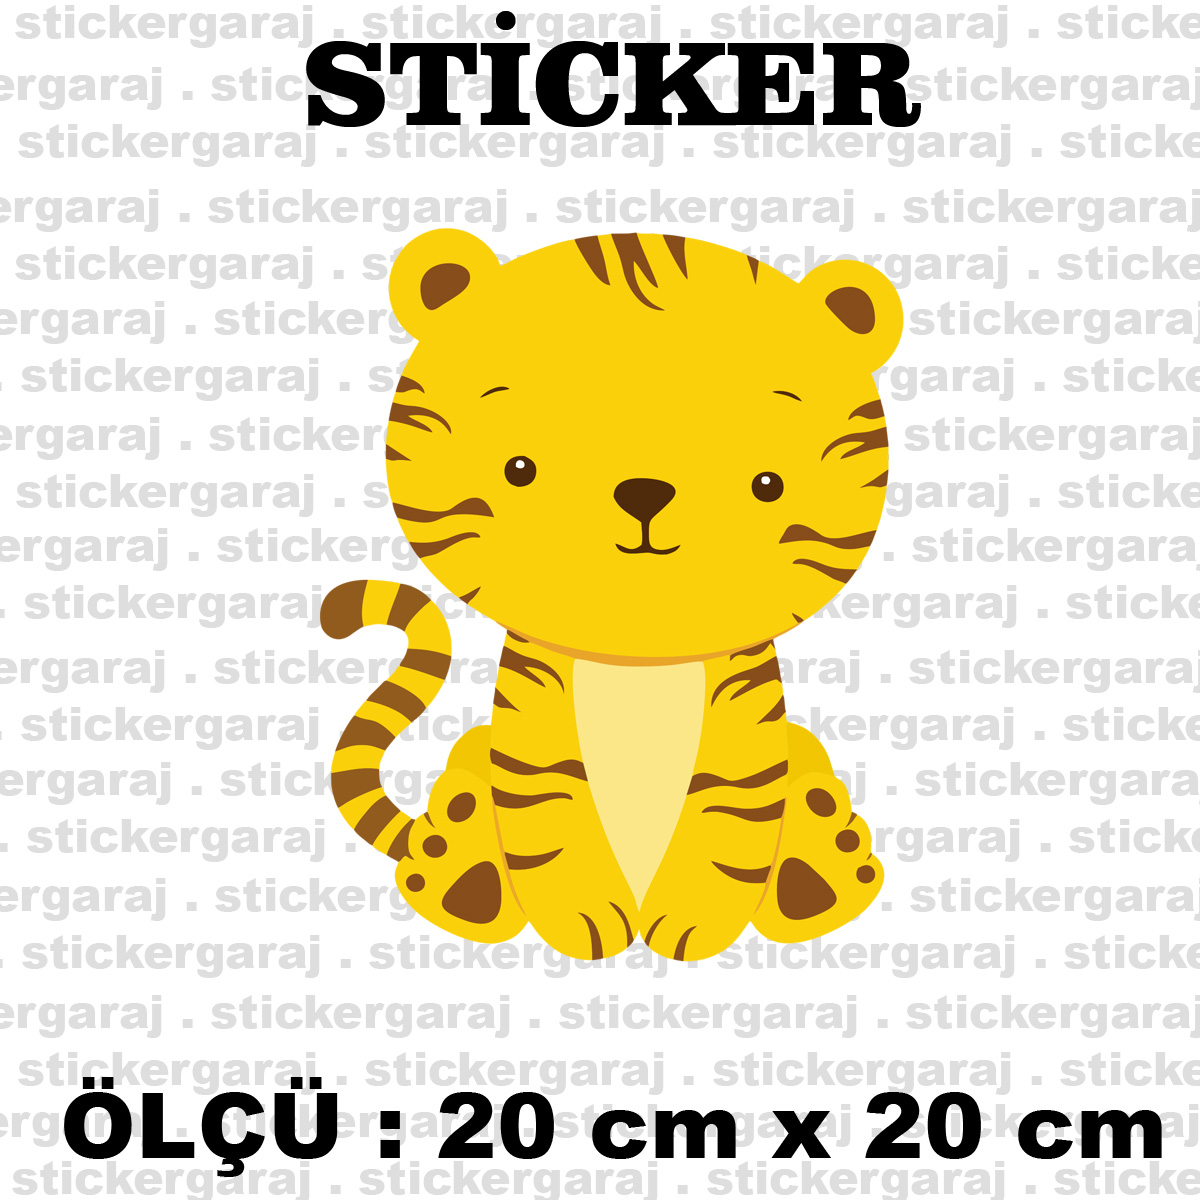 kaplan 20 20 - Sevimli kaplan yavrusu sticker